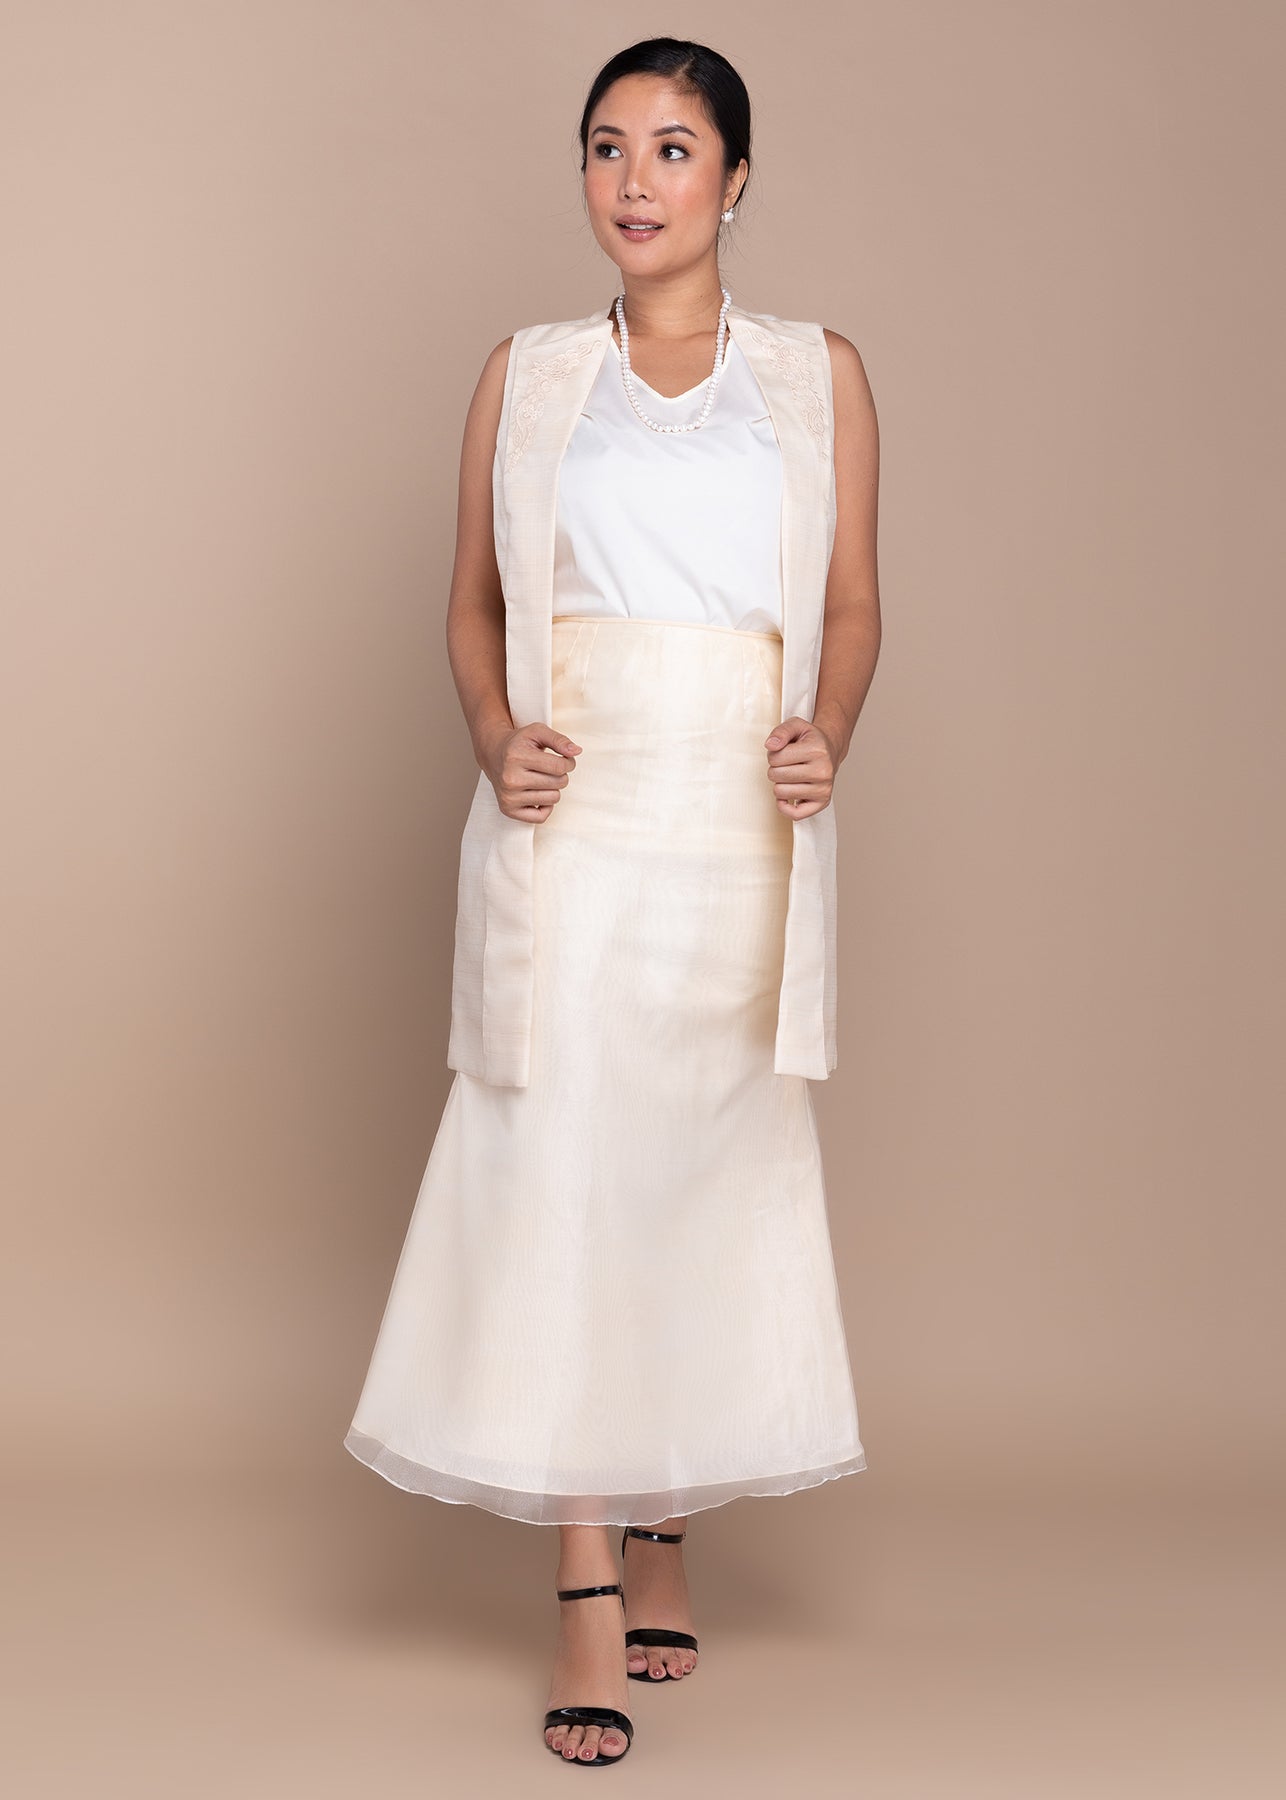 Buy Filipiniana Online Ph Traditional Dress For Women Kultura